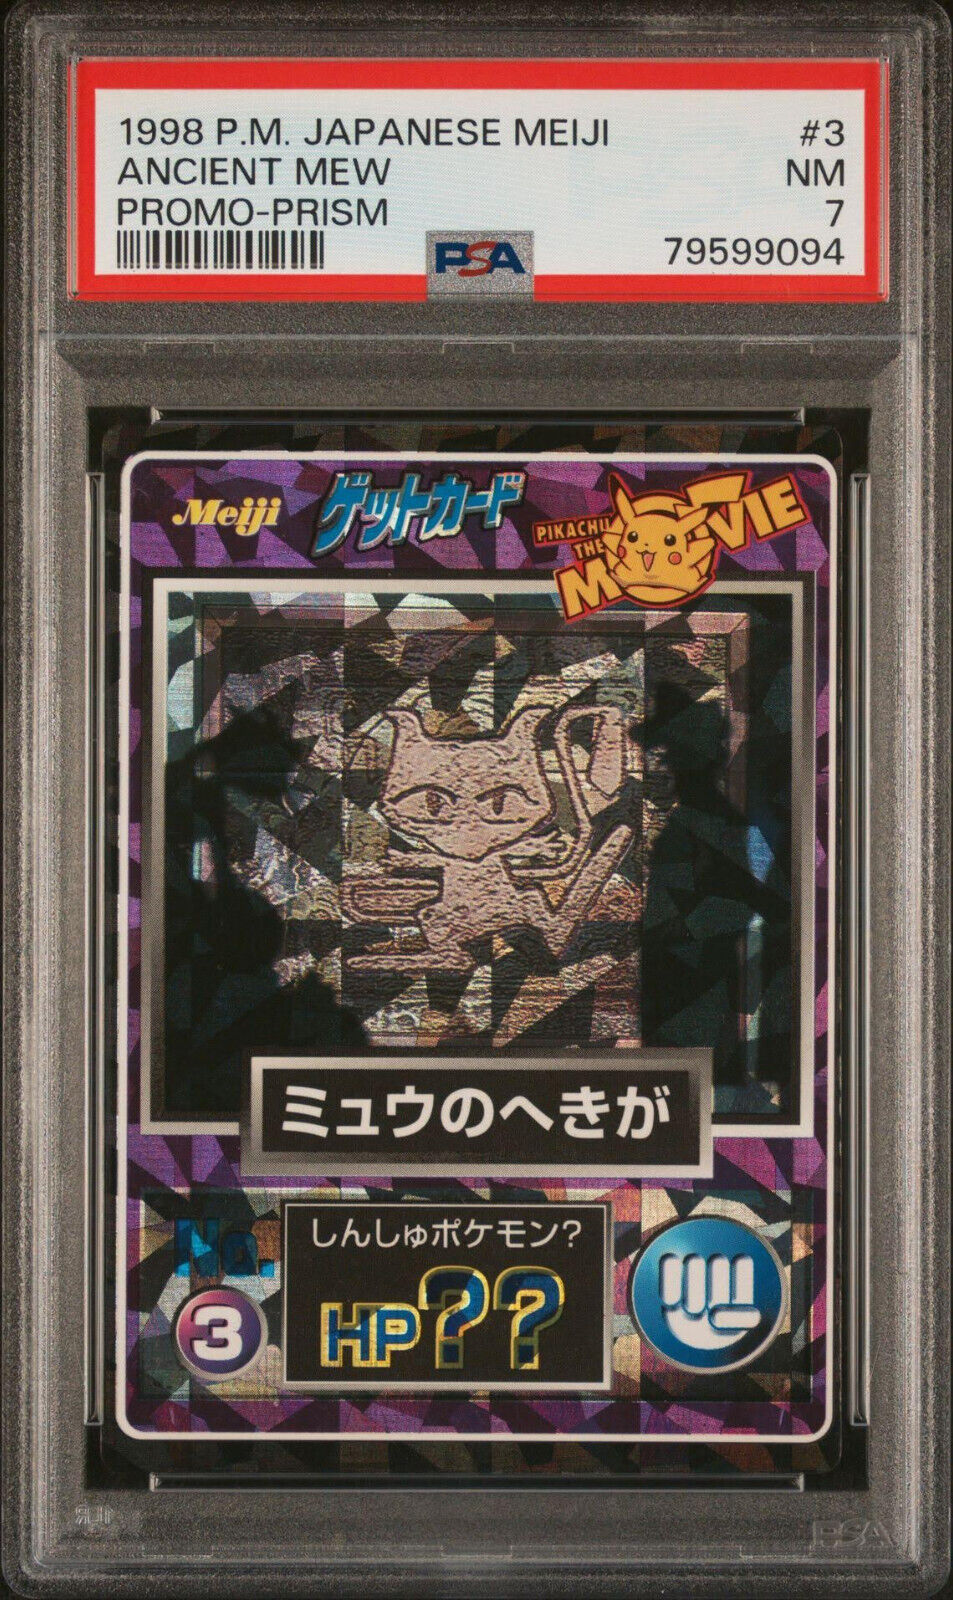 1998 Pokemon Japanese Meiji Prism Promo ANCIENT MEW #3 PSA 7 - VERY RARE